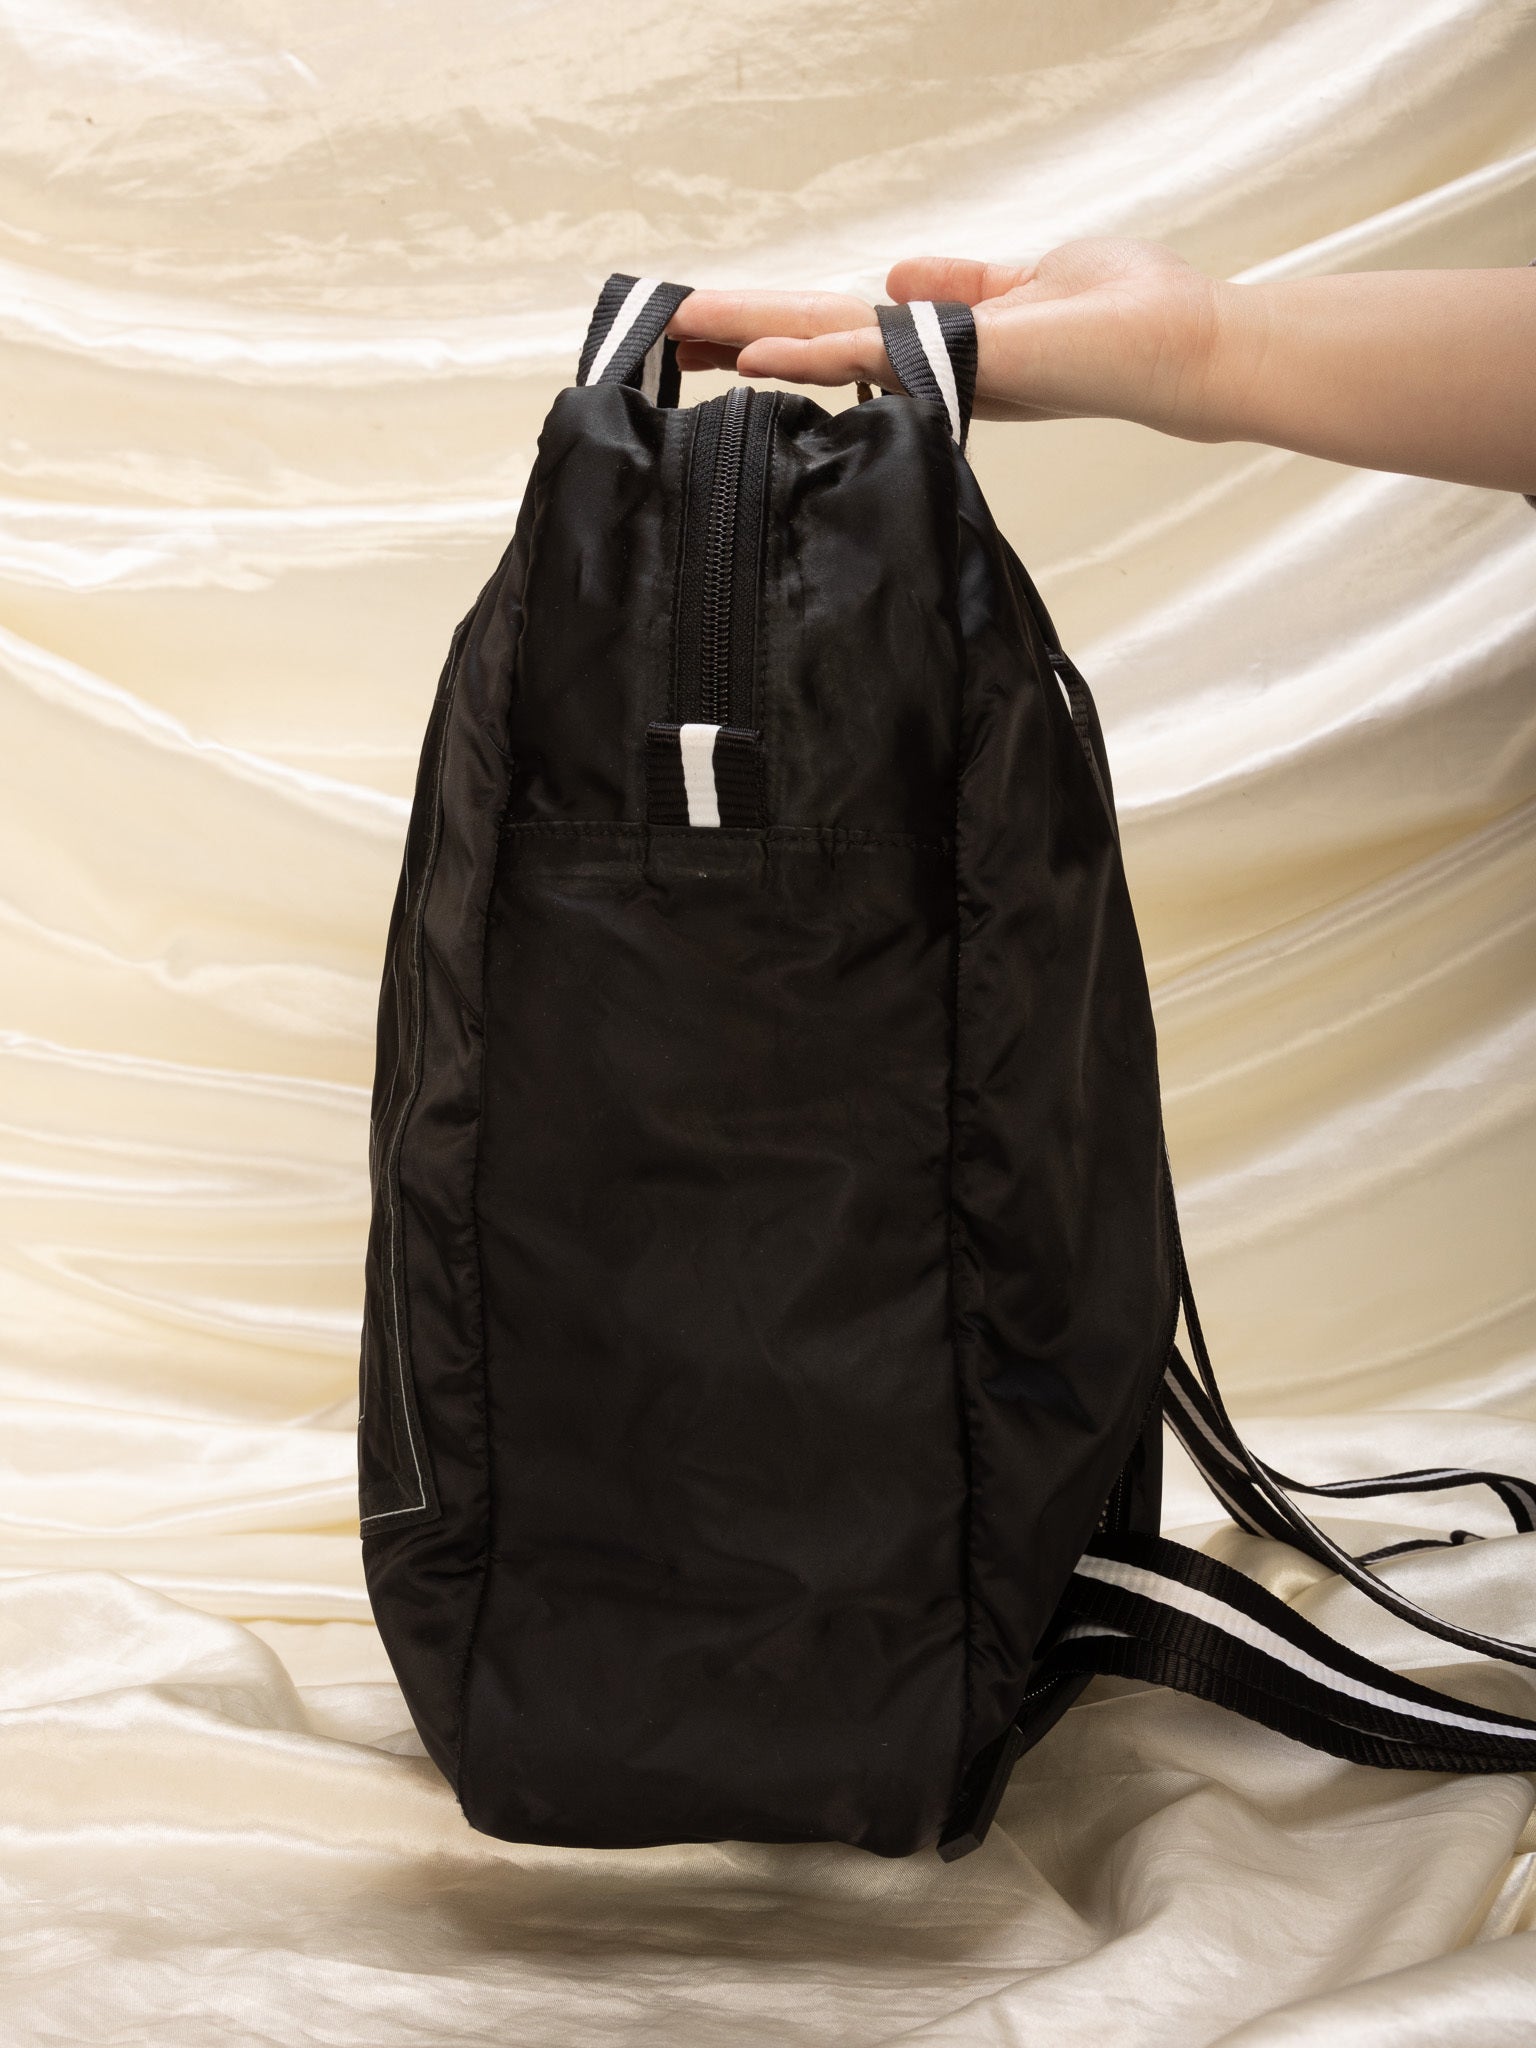 Rare Chanel Nylon Backpack